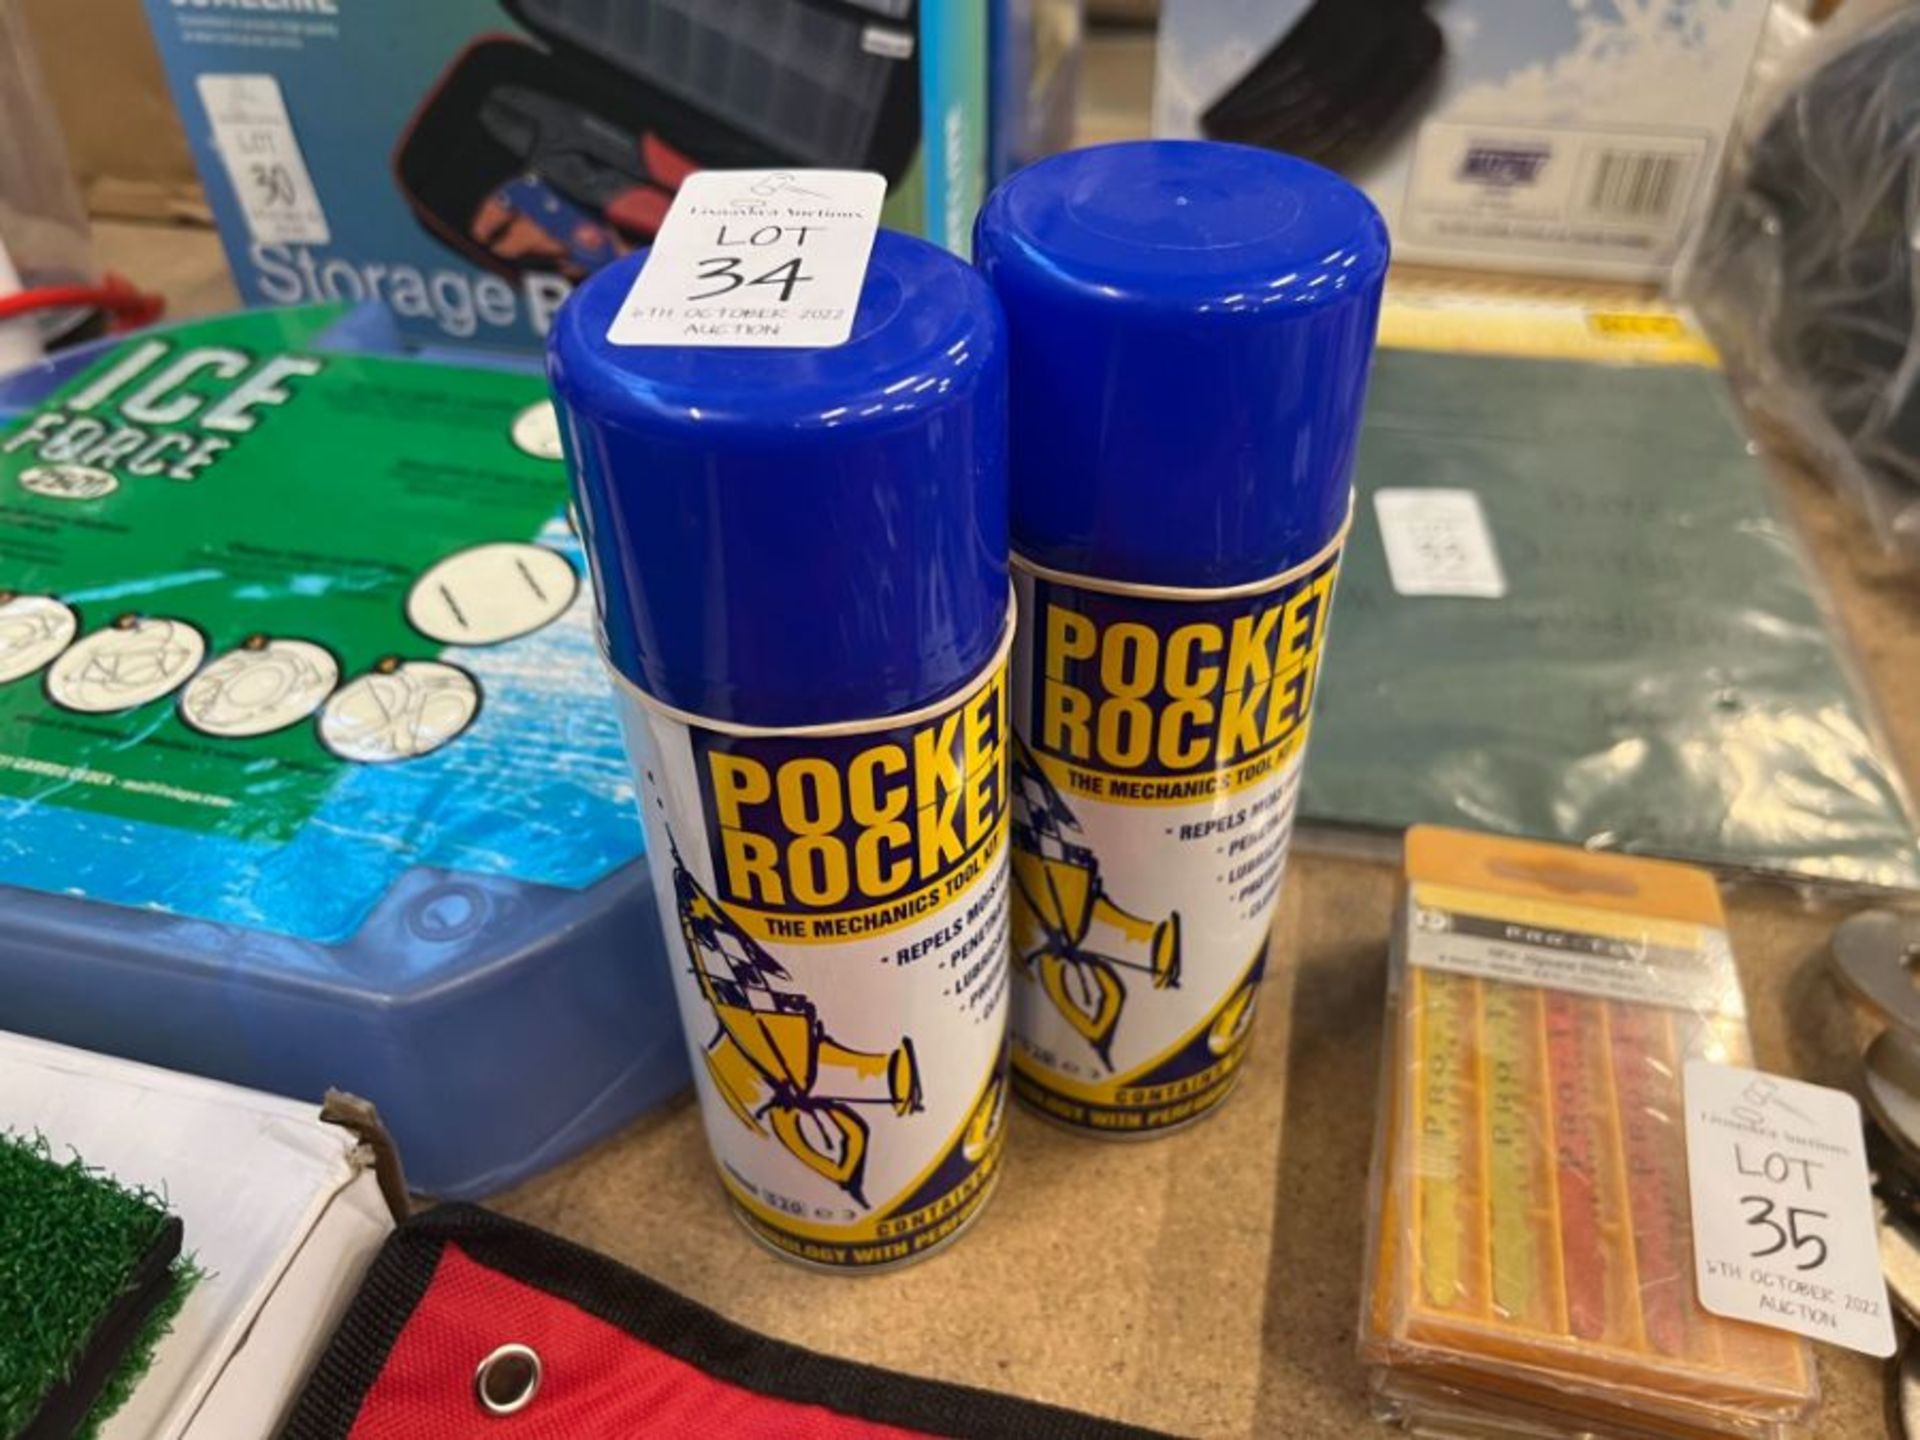 2X CANS OF POCKET ROCKET